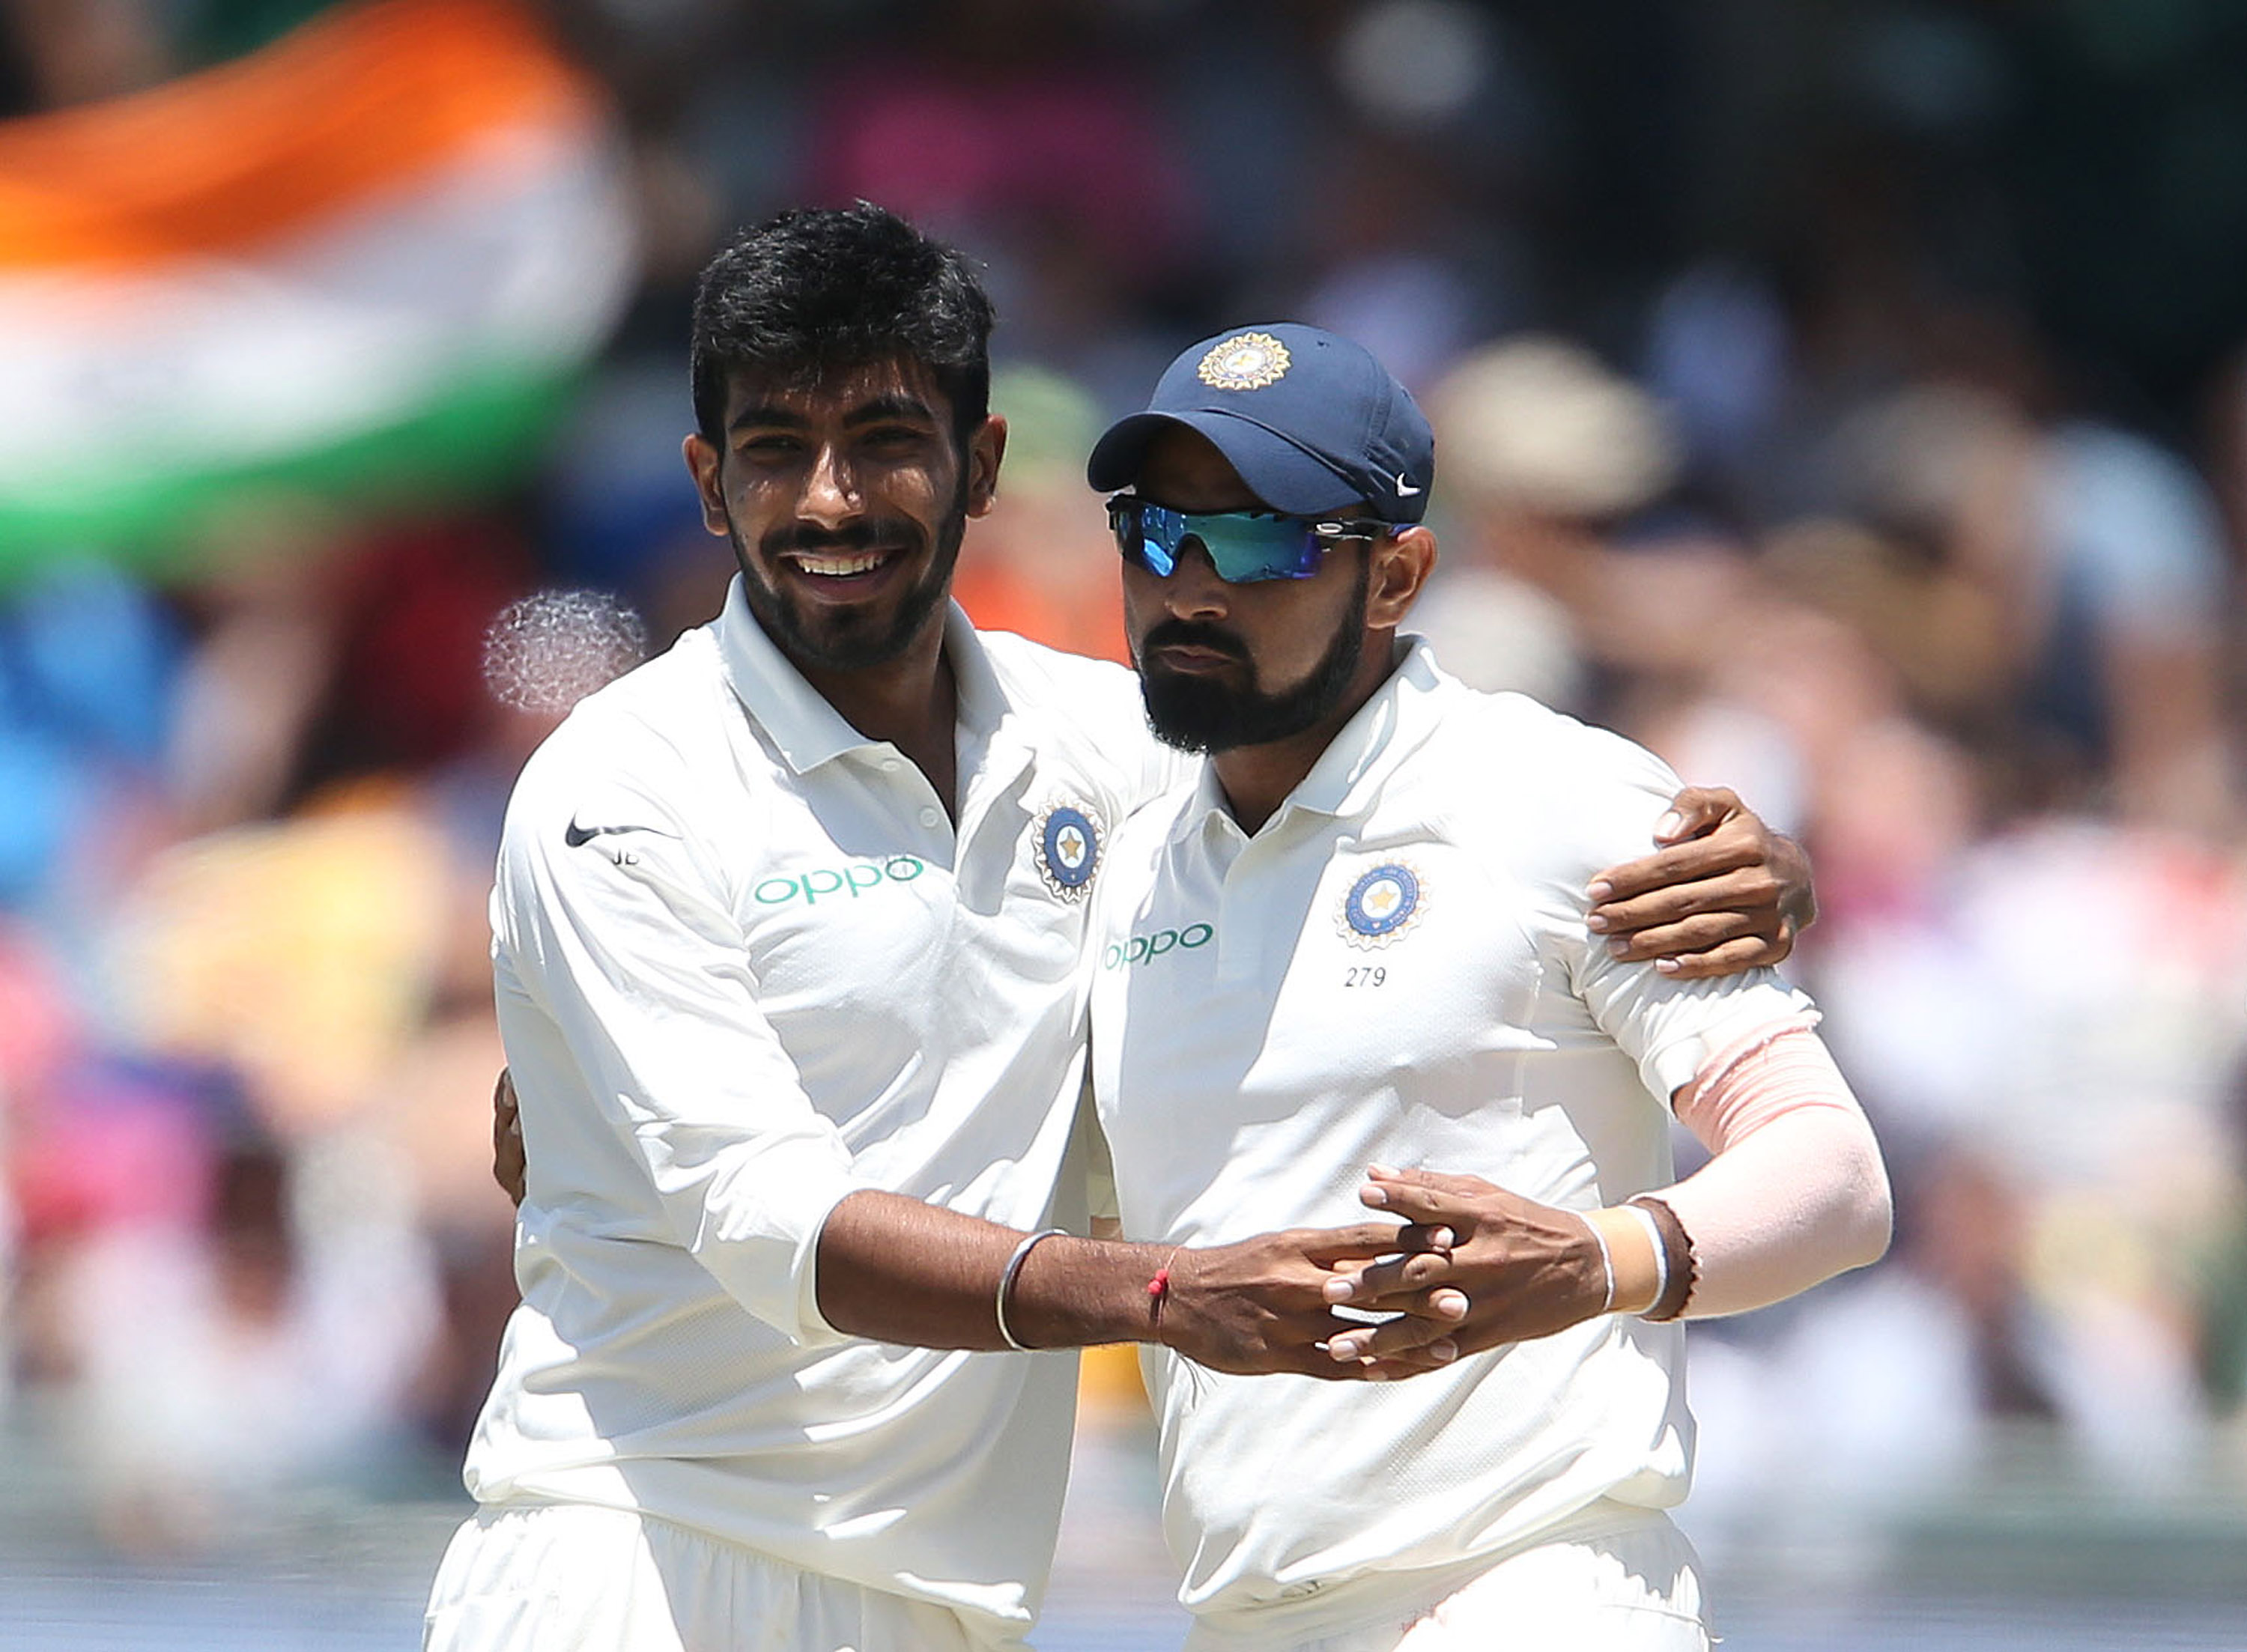 ICC Test team 2018 | Virat Kohli named captain ; Rishabh Pant and Jasprit Bumrah included